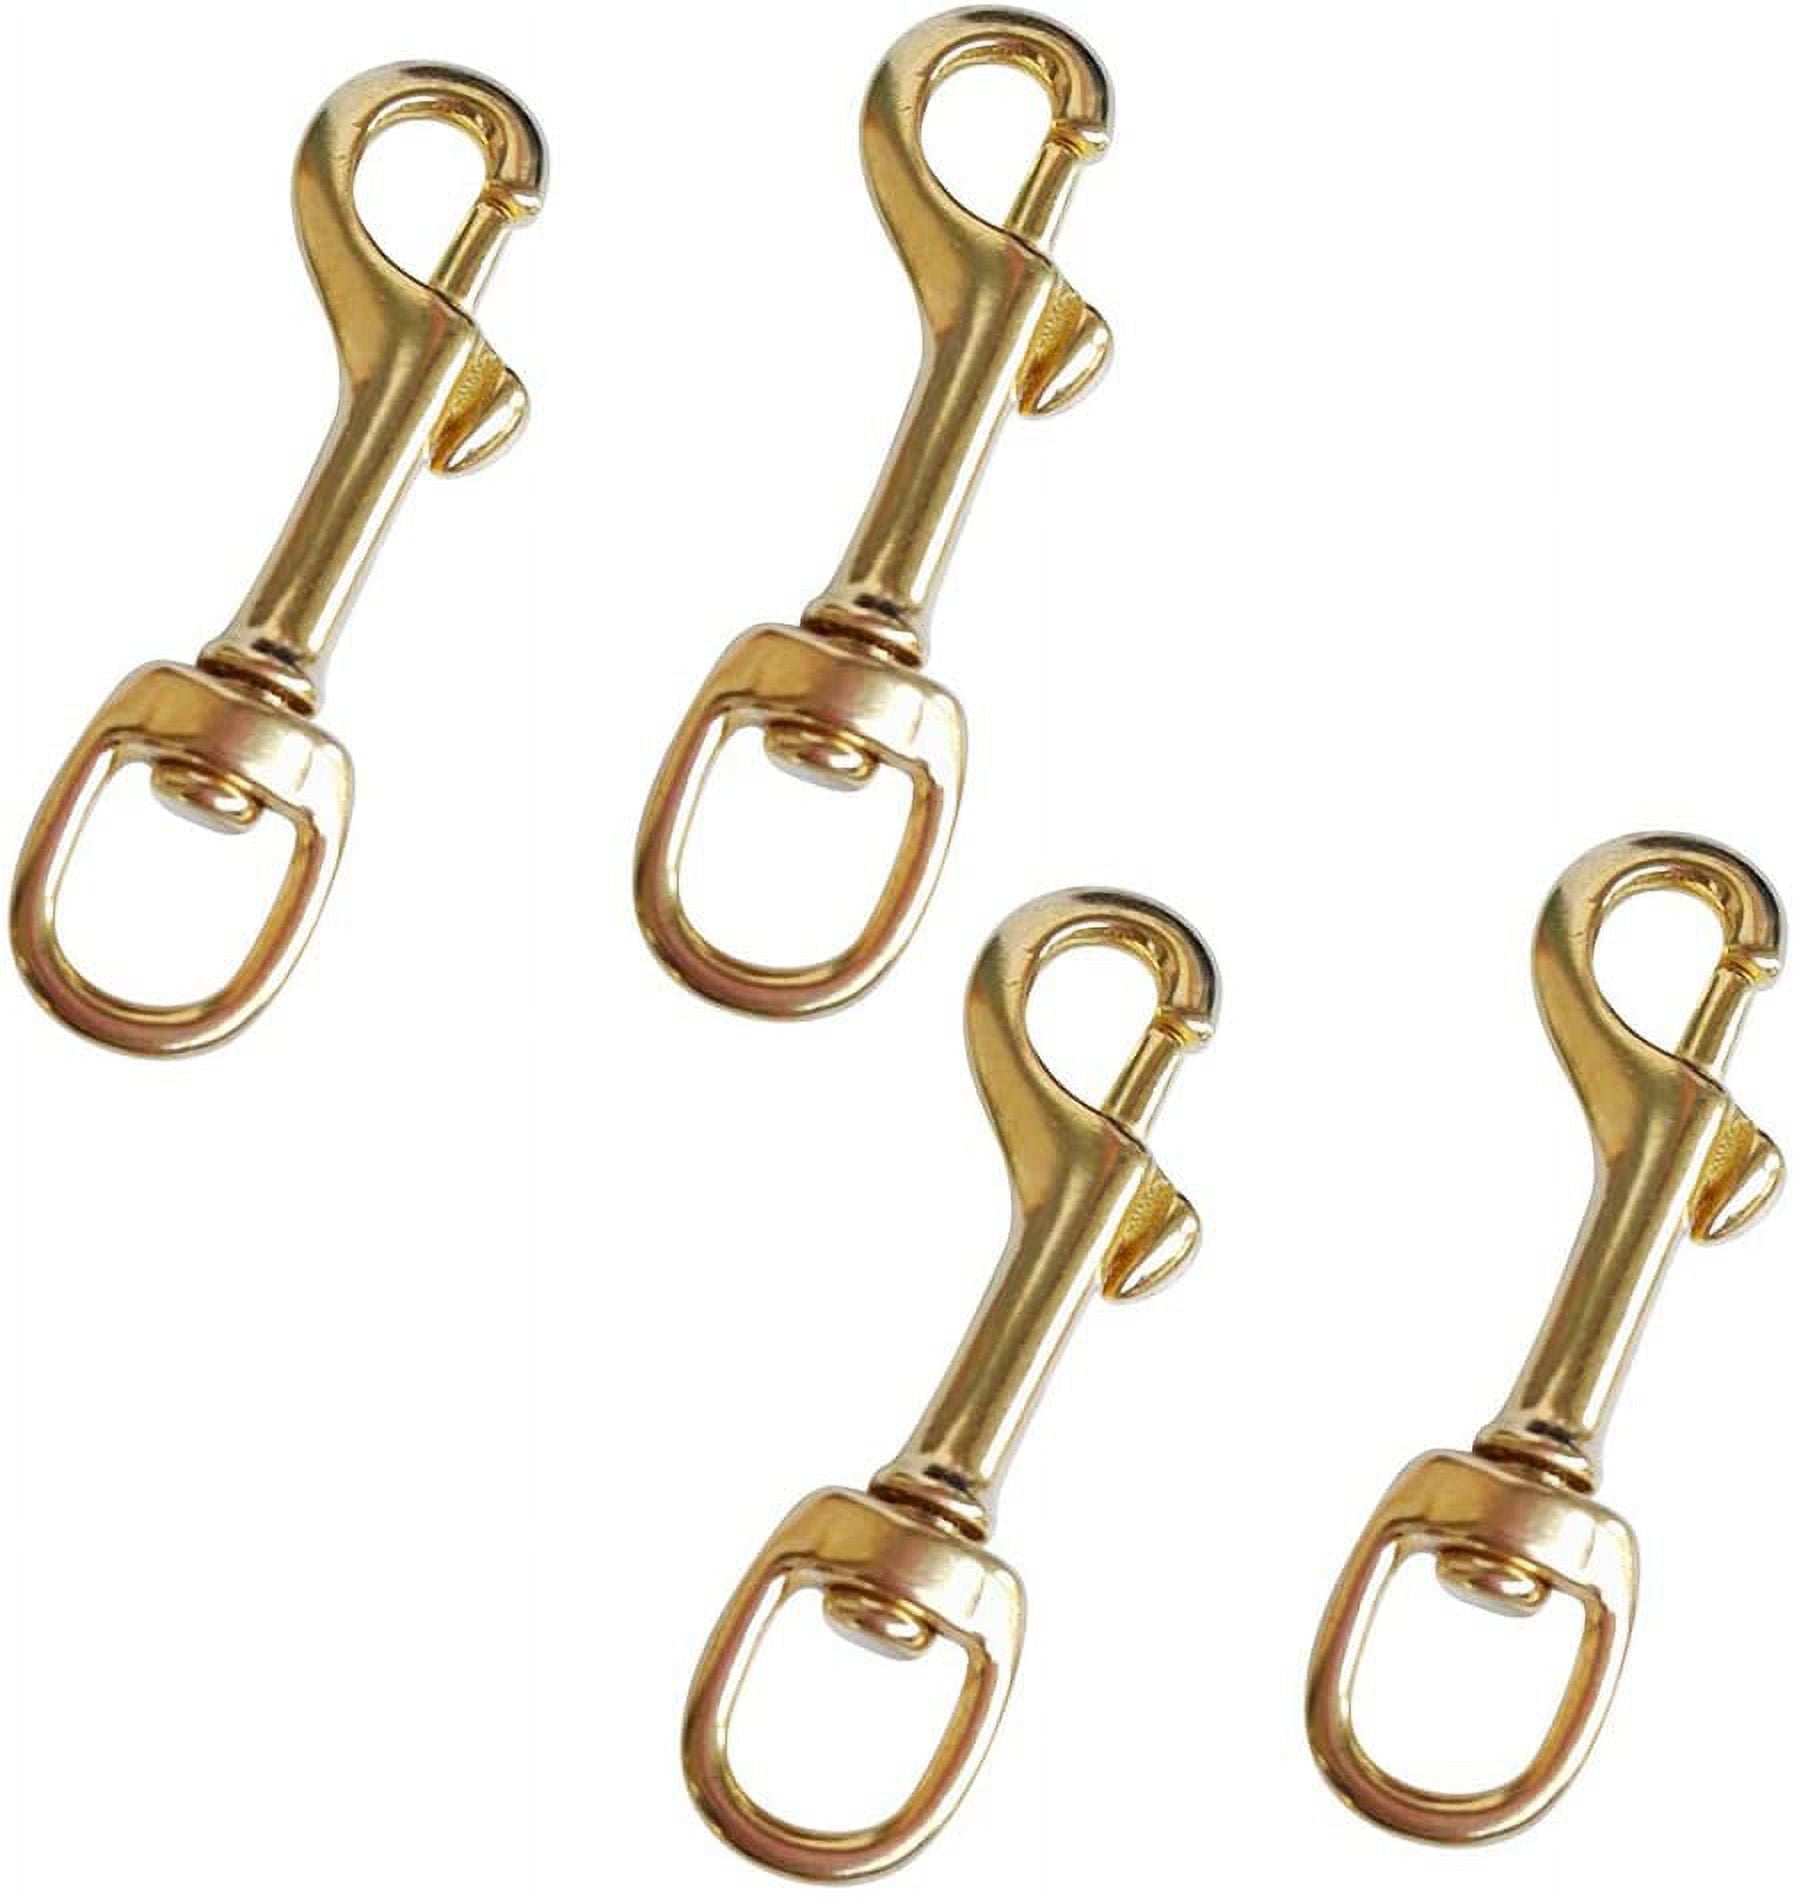 Swivel Snap Hooks,Swivel Trigger Snap Hooks,Spring O Rings, Pack of 4, Pure  Brass Swivel Eye Bolt Snap Hook, 3.1 Inch by 1/2 Inch, Multi-Purpose